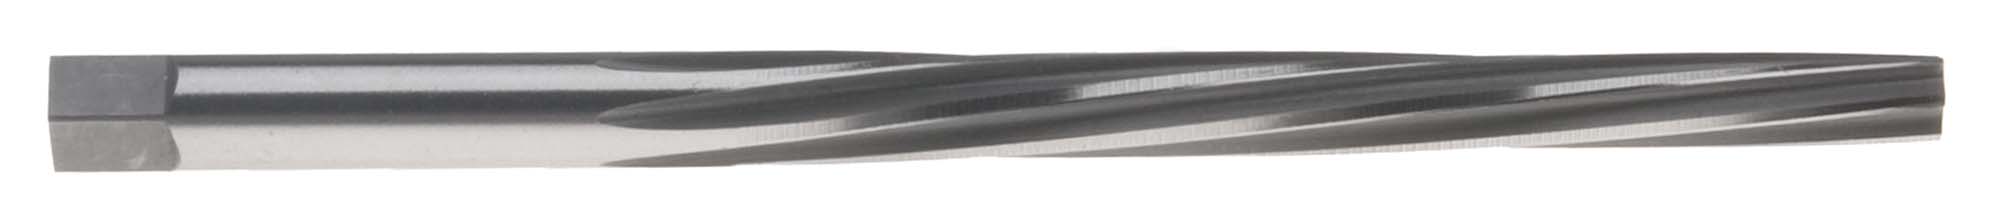 #2 Spiral Flute Taper Pin Reamer, High Speed Steel